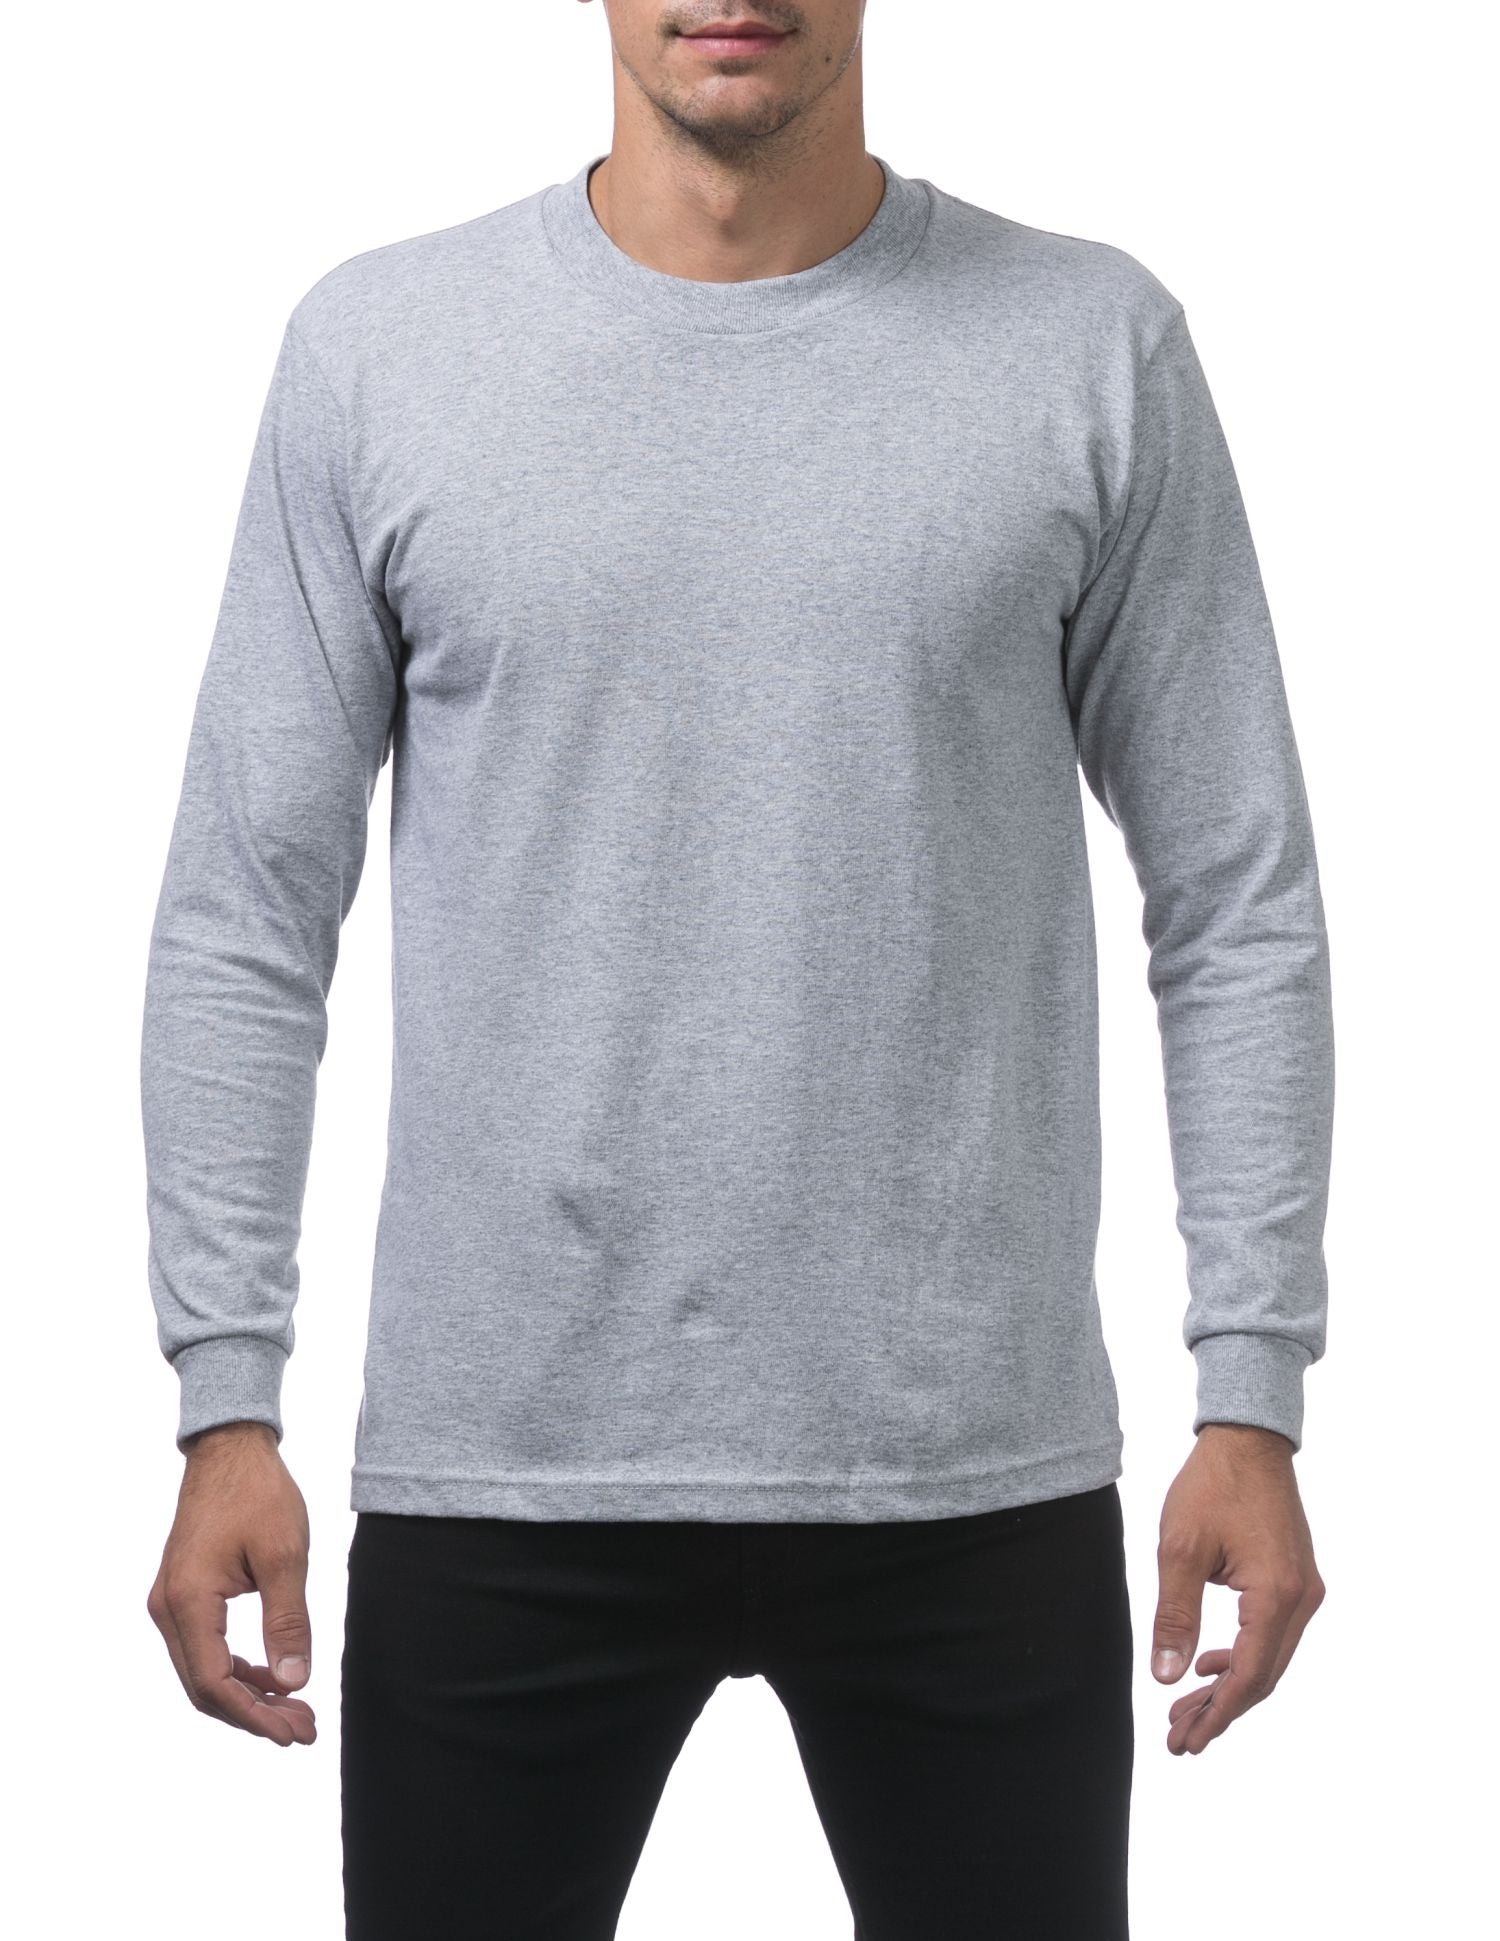 Pro Club Men's Comfort Cotton Long Sleeve T-Shirt Grey